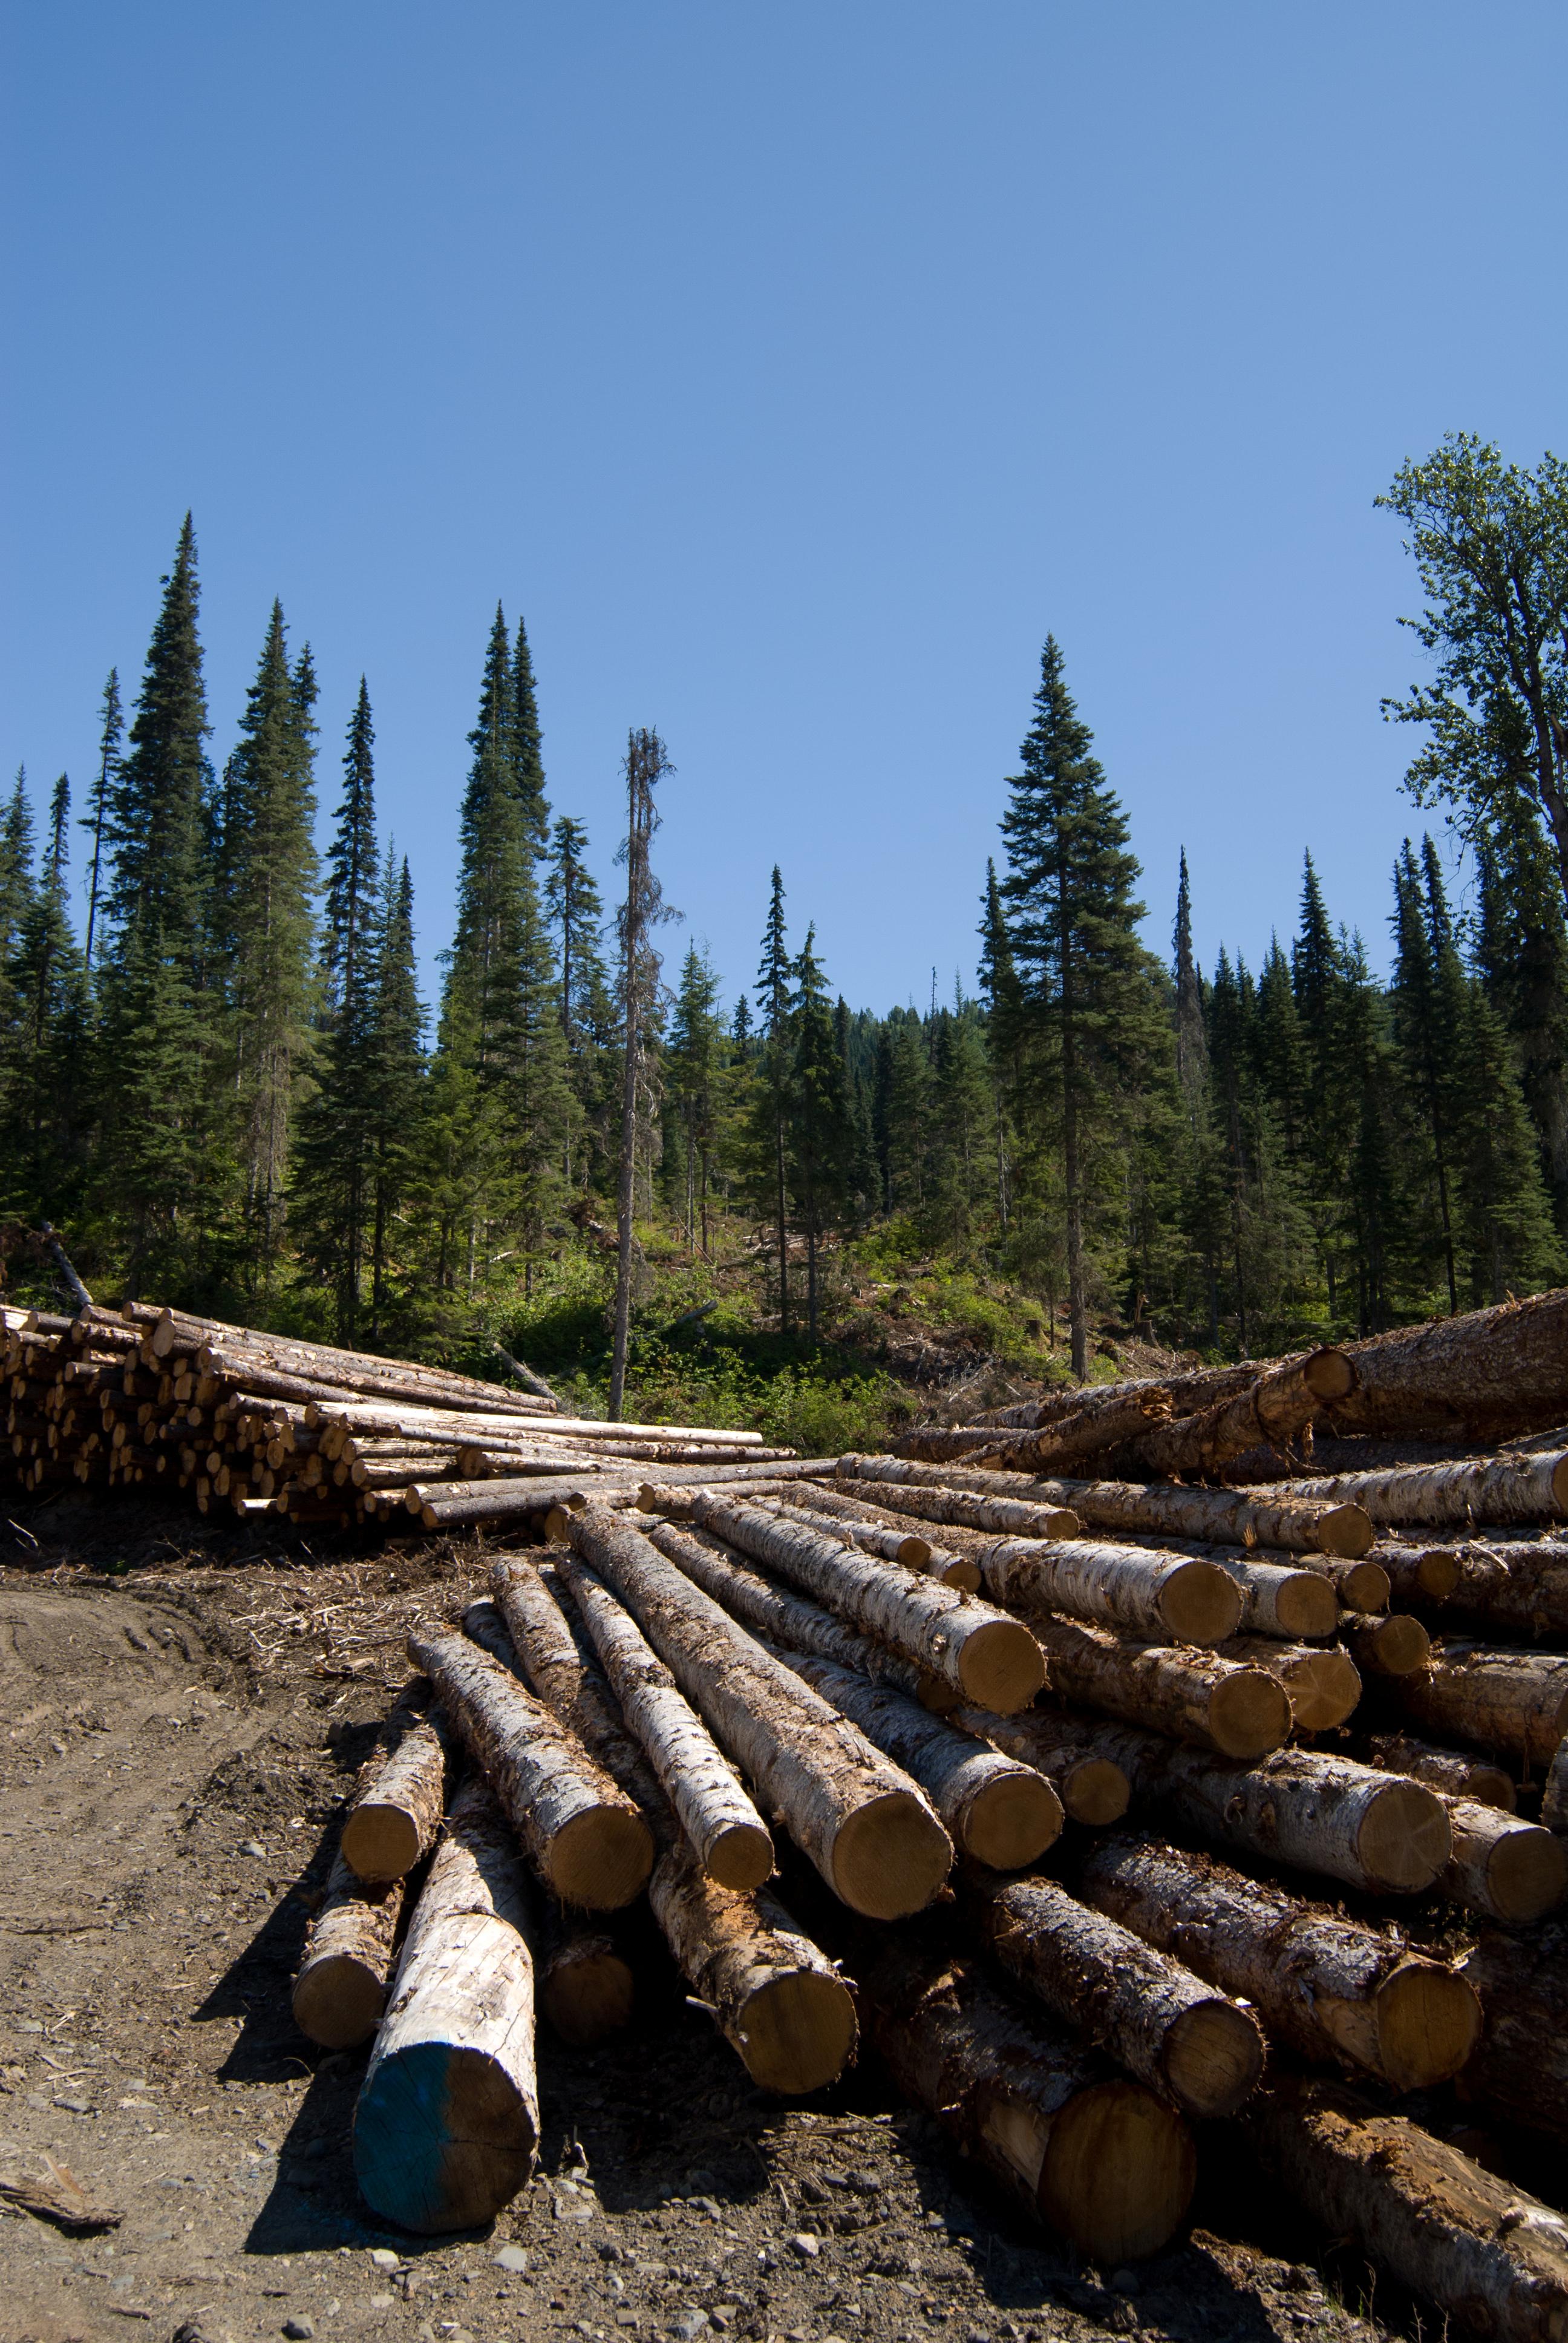 Logging operations in Northwest British Columbia, Canada (Photo by John Innes)